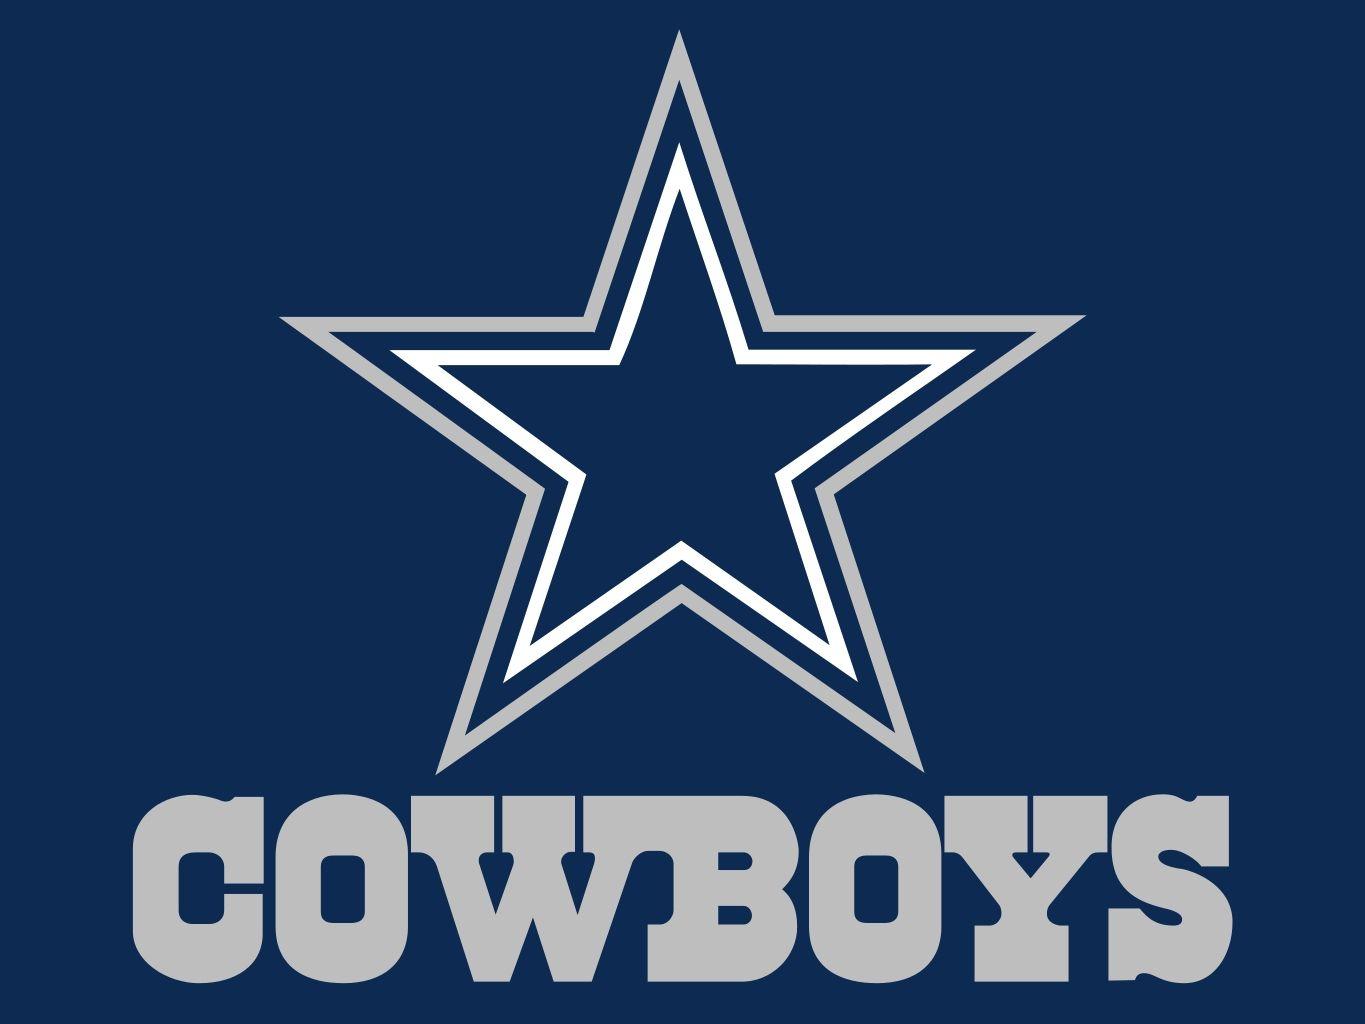 Cowboys Football Logo - NFL Teams – Dallas Cowboys - Collins Flags Blog